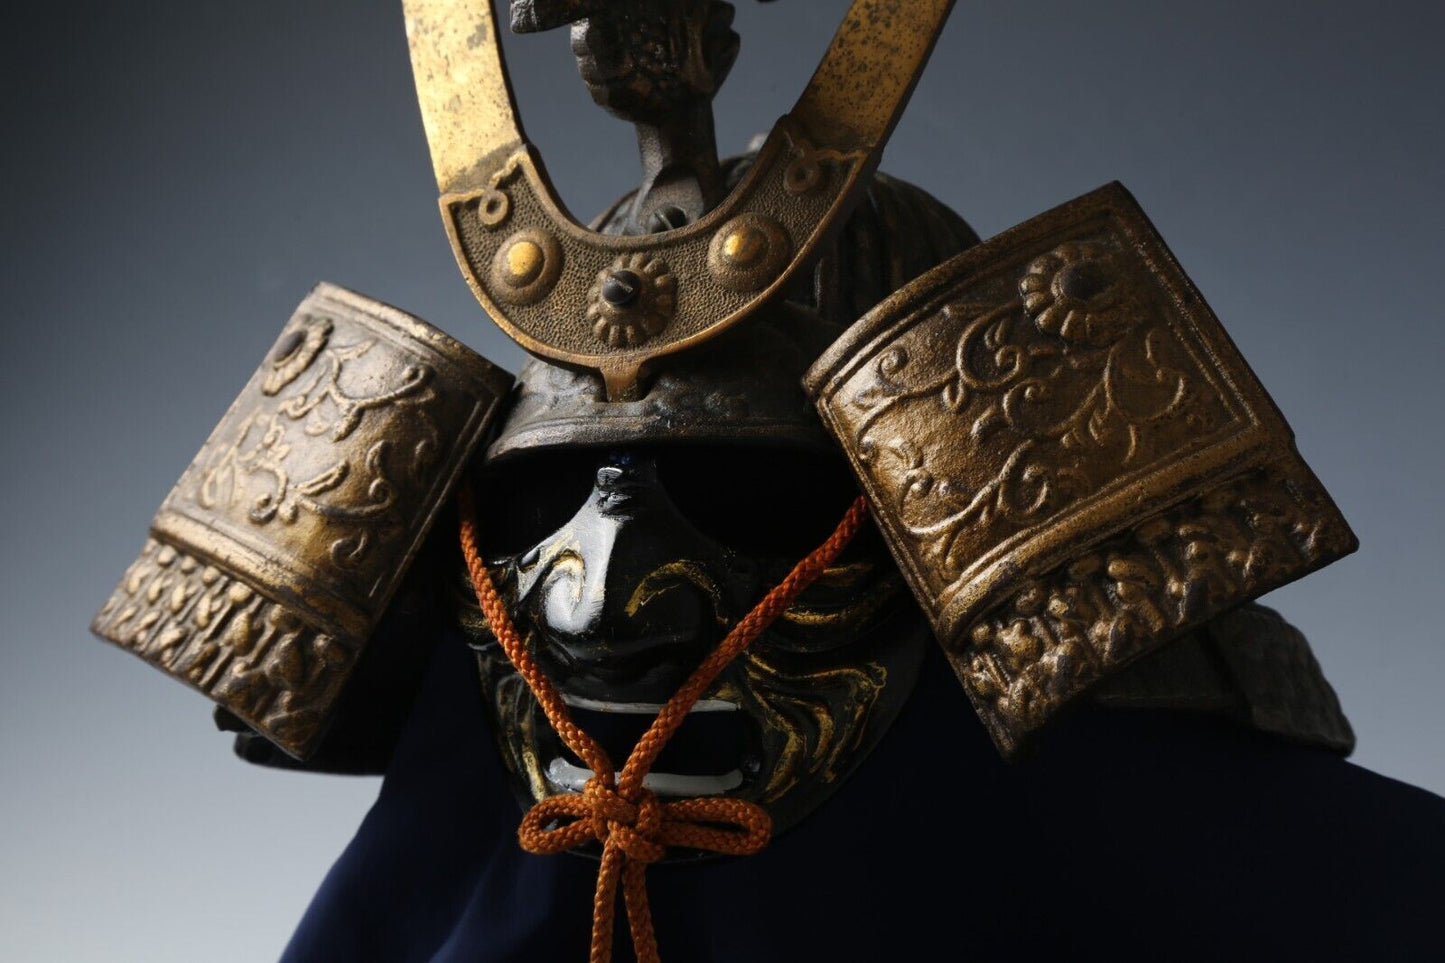 Vintage Samurai Kabuto Helmet - Dragon Japanese Helmet with a Mask